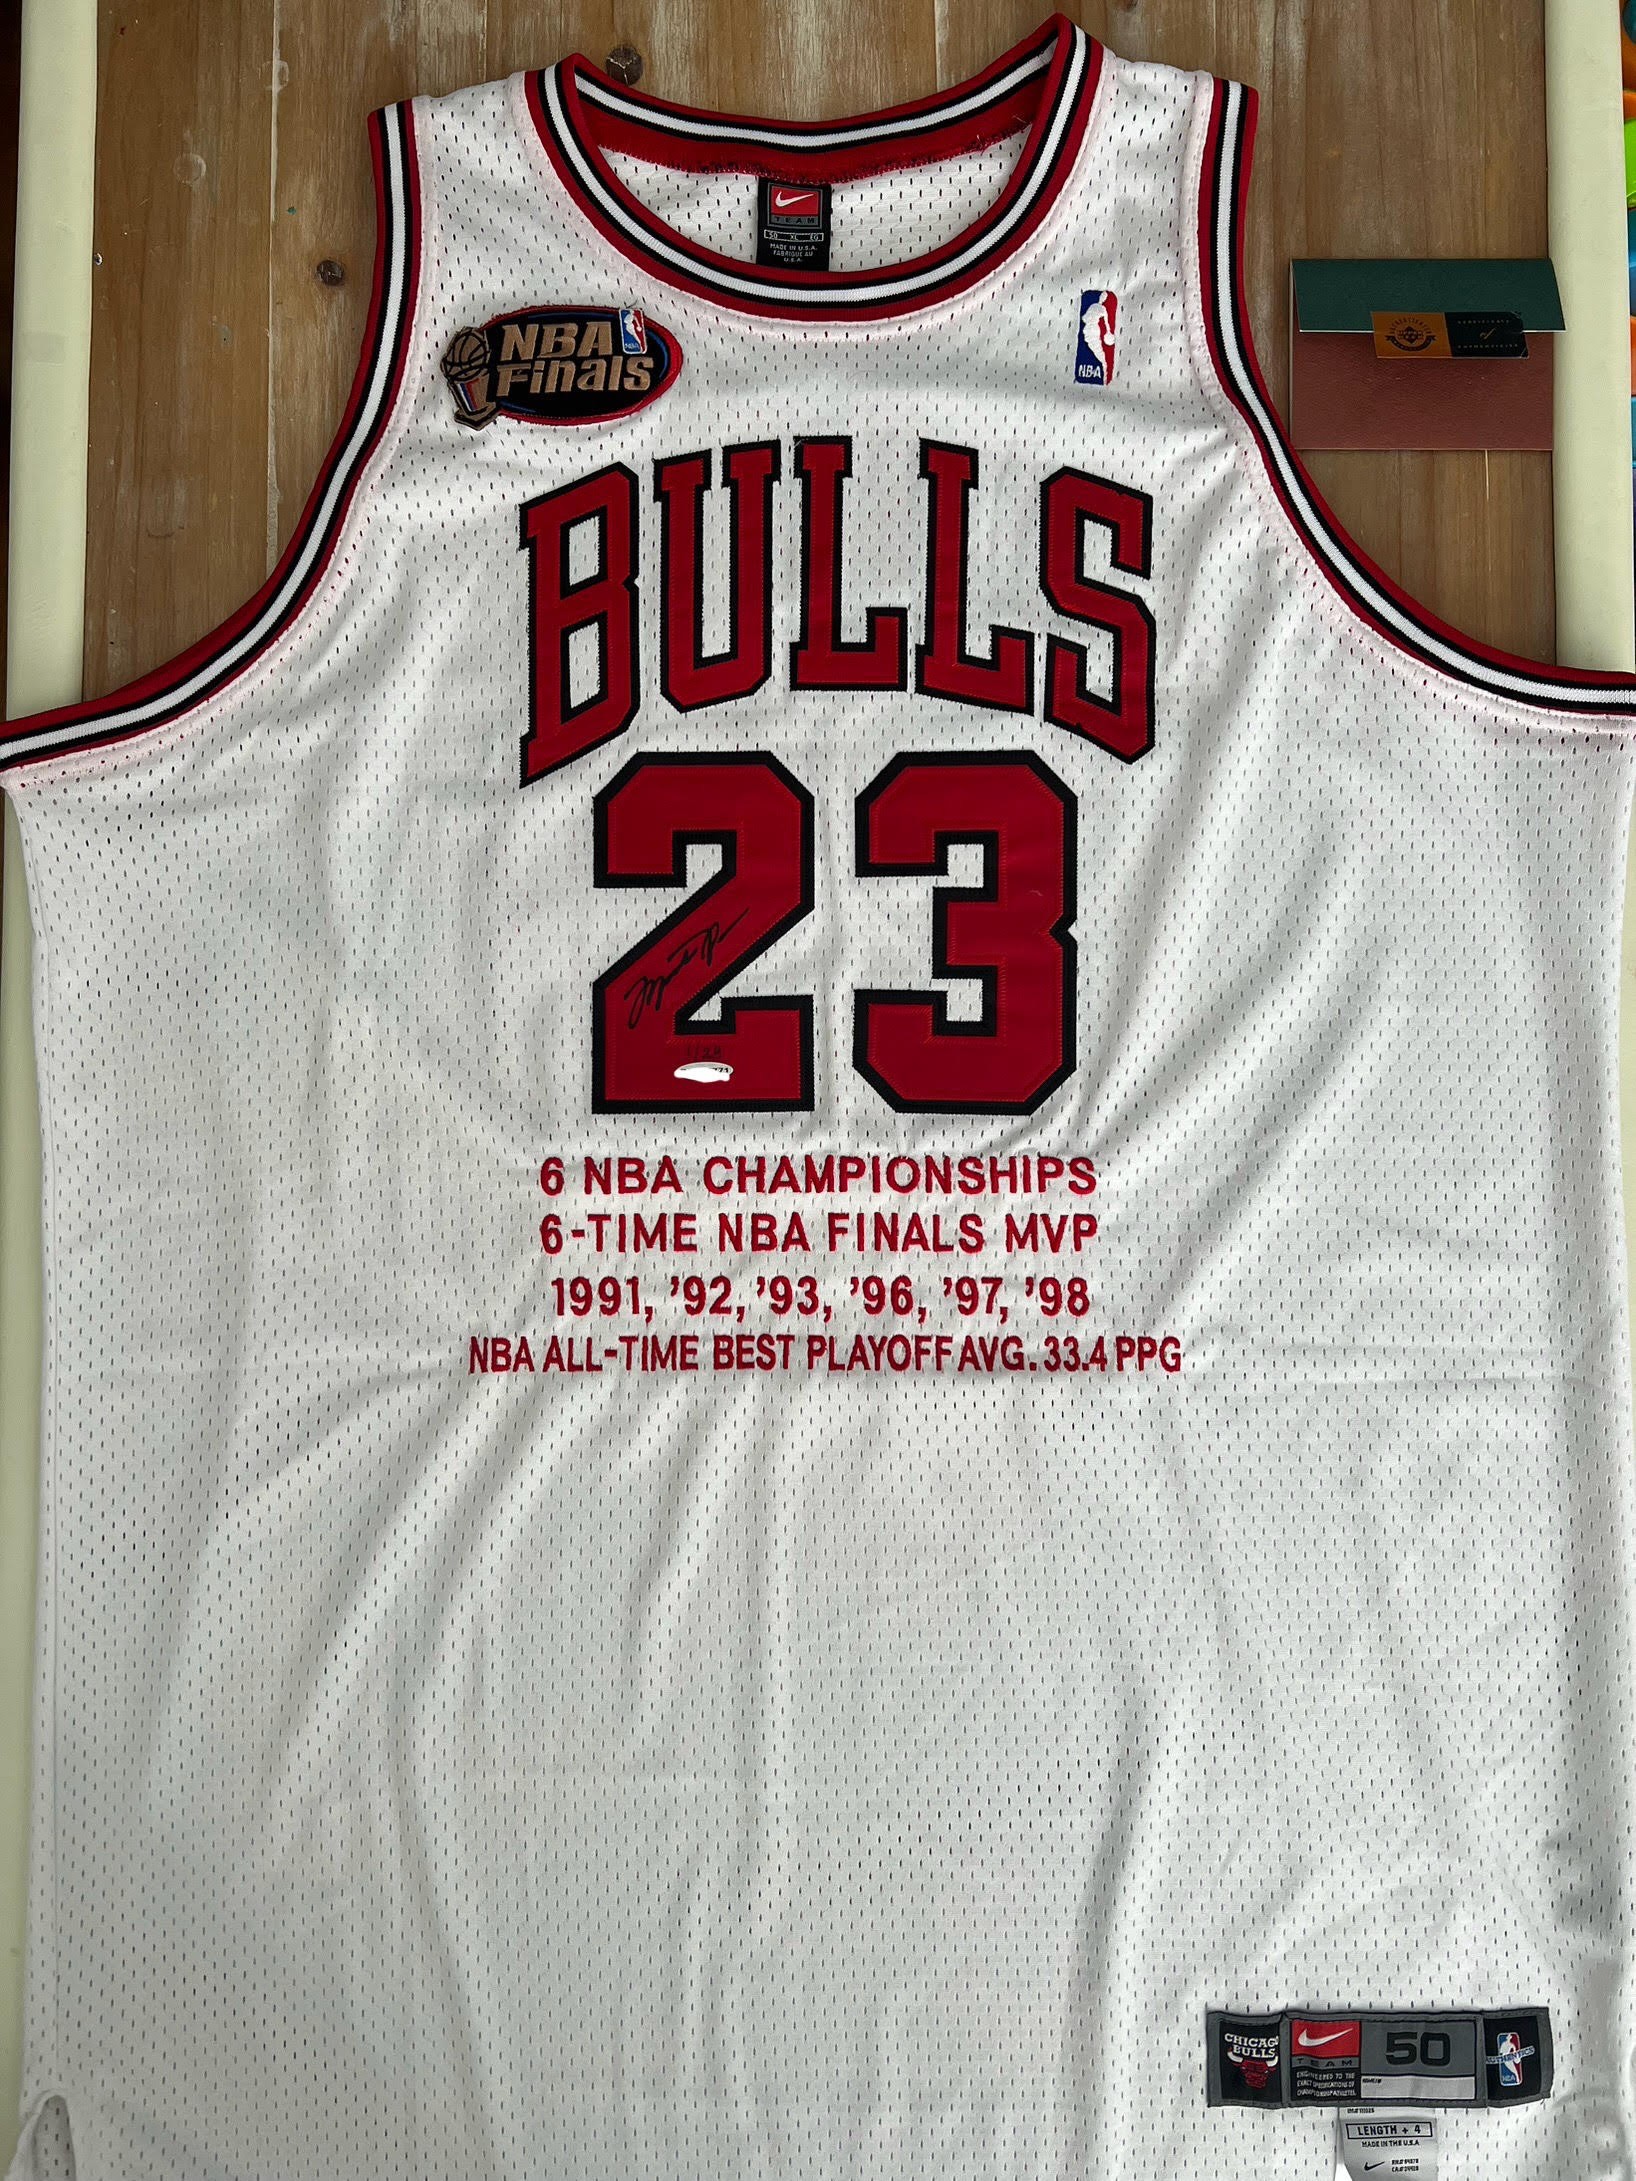 Art Country Canada - Micheal Jordan 1998 NBA All-STAR GAME JERSEY Signed  Basketball bulls jersey